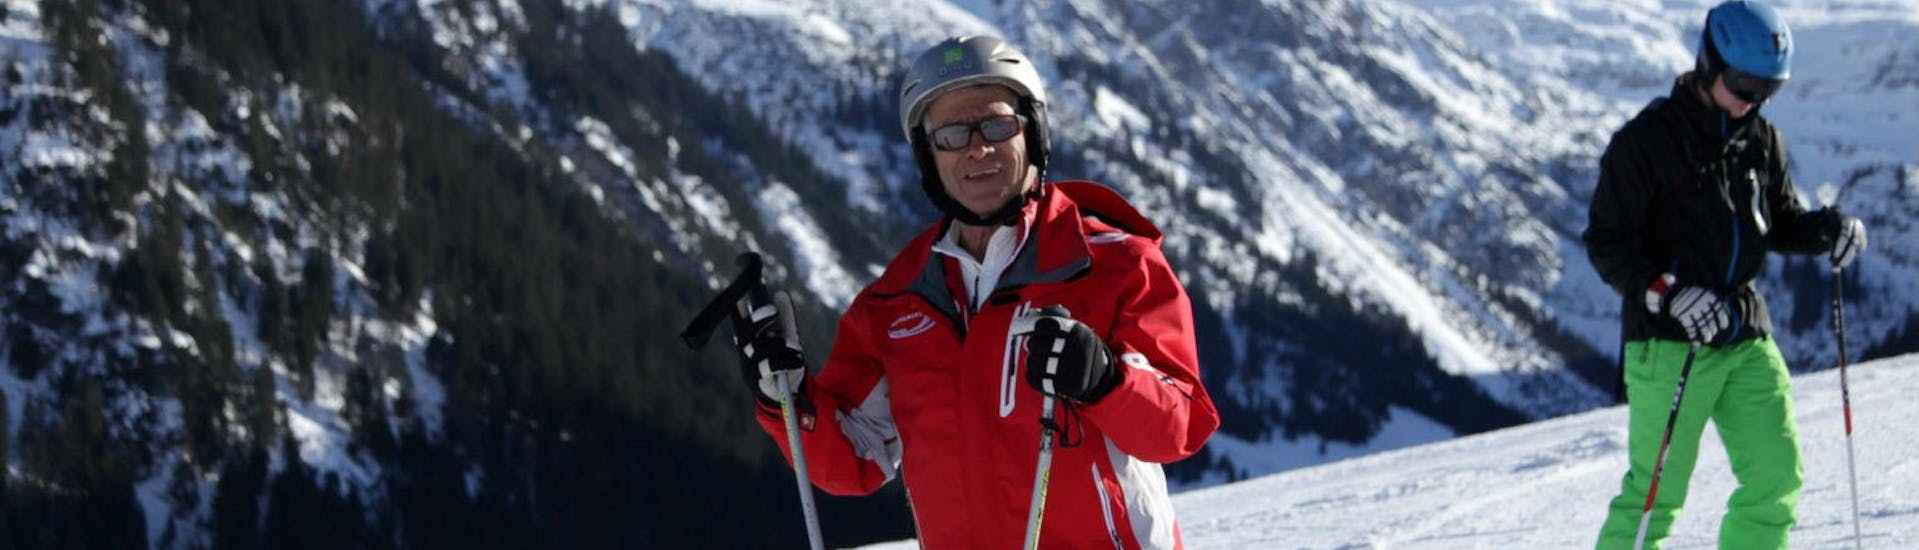 Clases de esquí para adultos para avanzados.